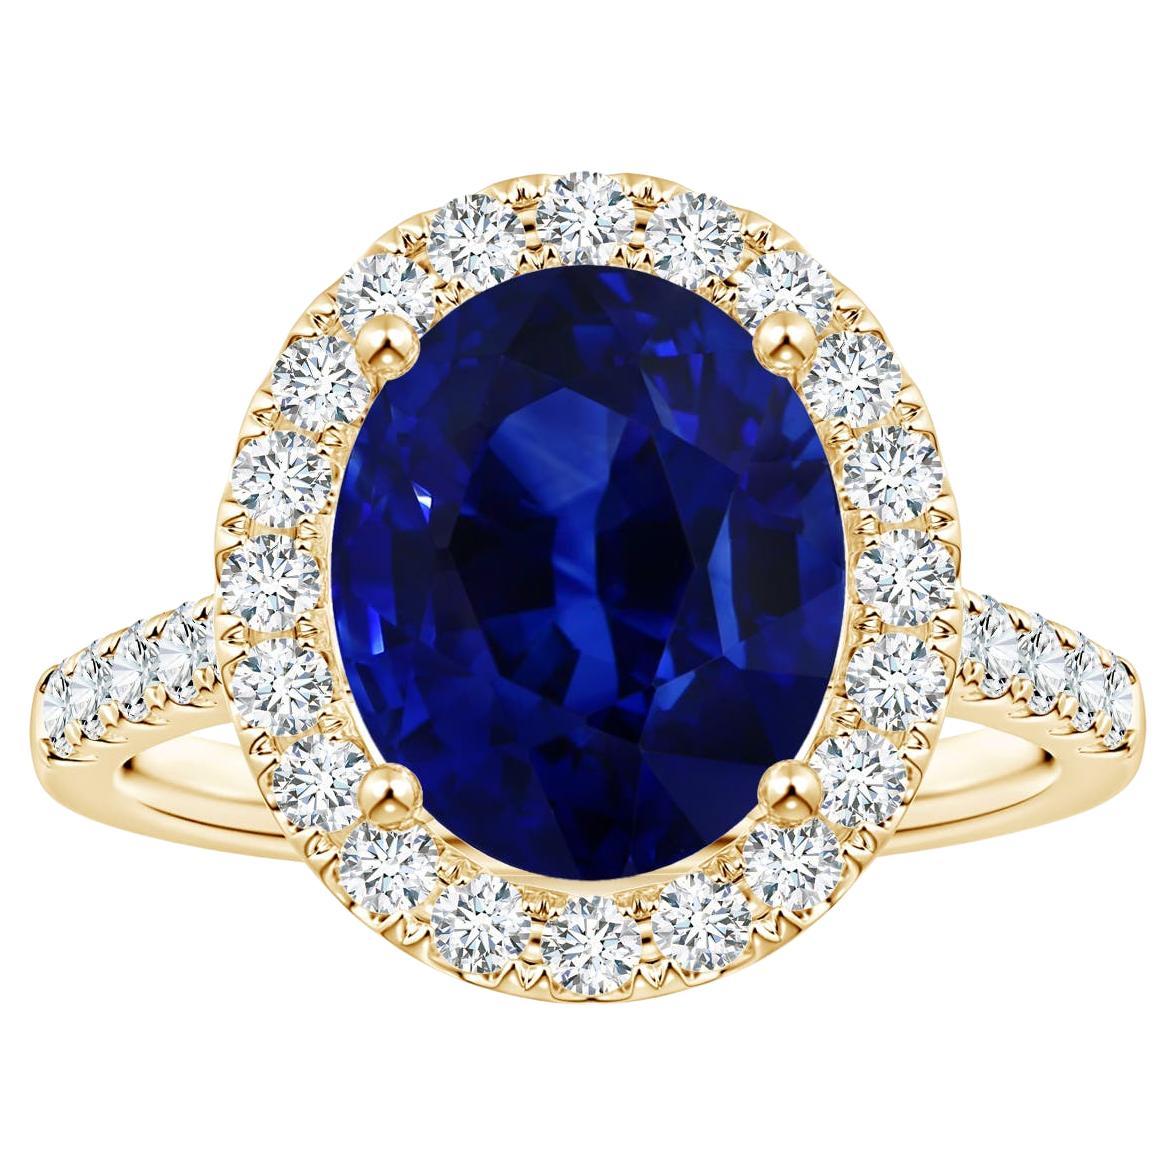 ANGARA Bague en or jaune avec halo de saphirs bleus naturels certifiés GIA et diamants